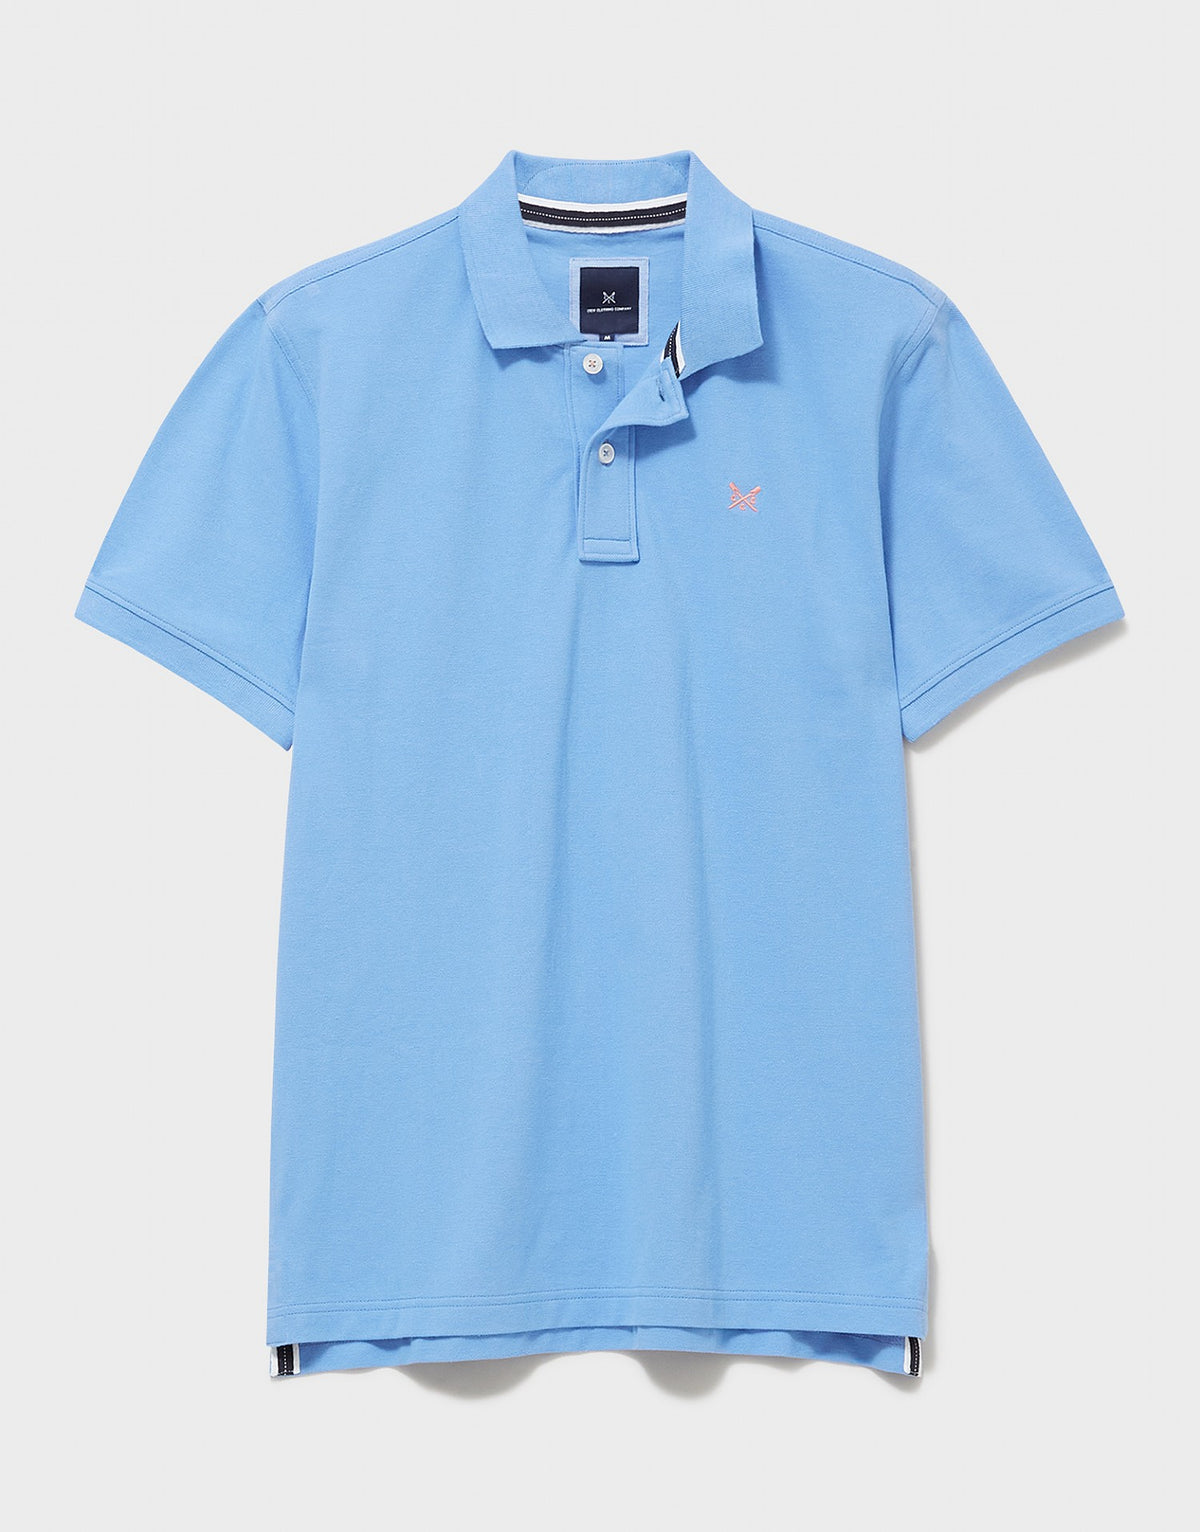 Crew Clothing Mens Pique Polo Shirt 'Classic Pique Polo' - Short Sleeved, 05, Mke002, Cornflower Blue